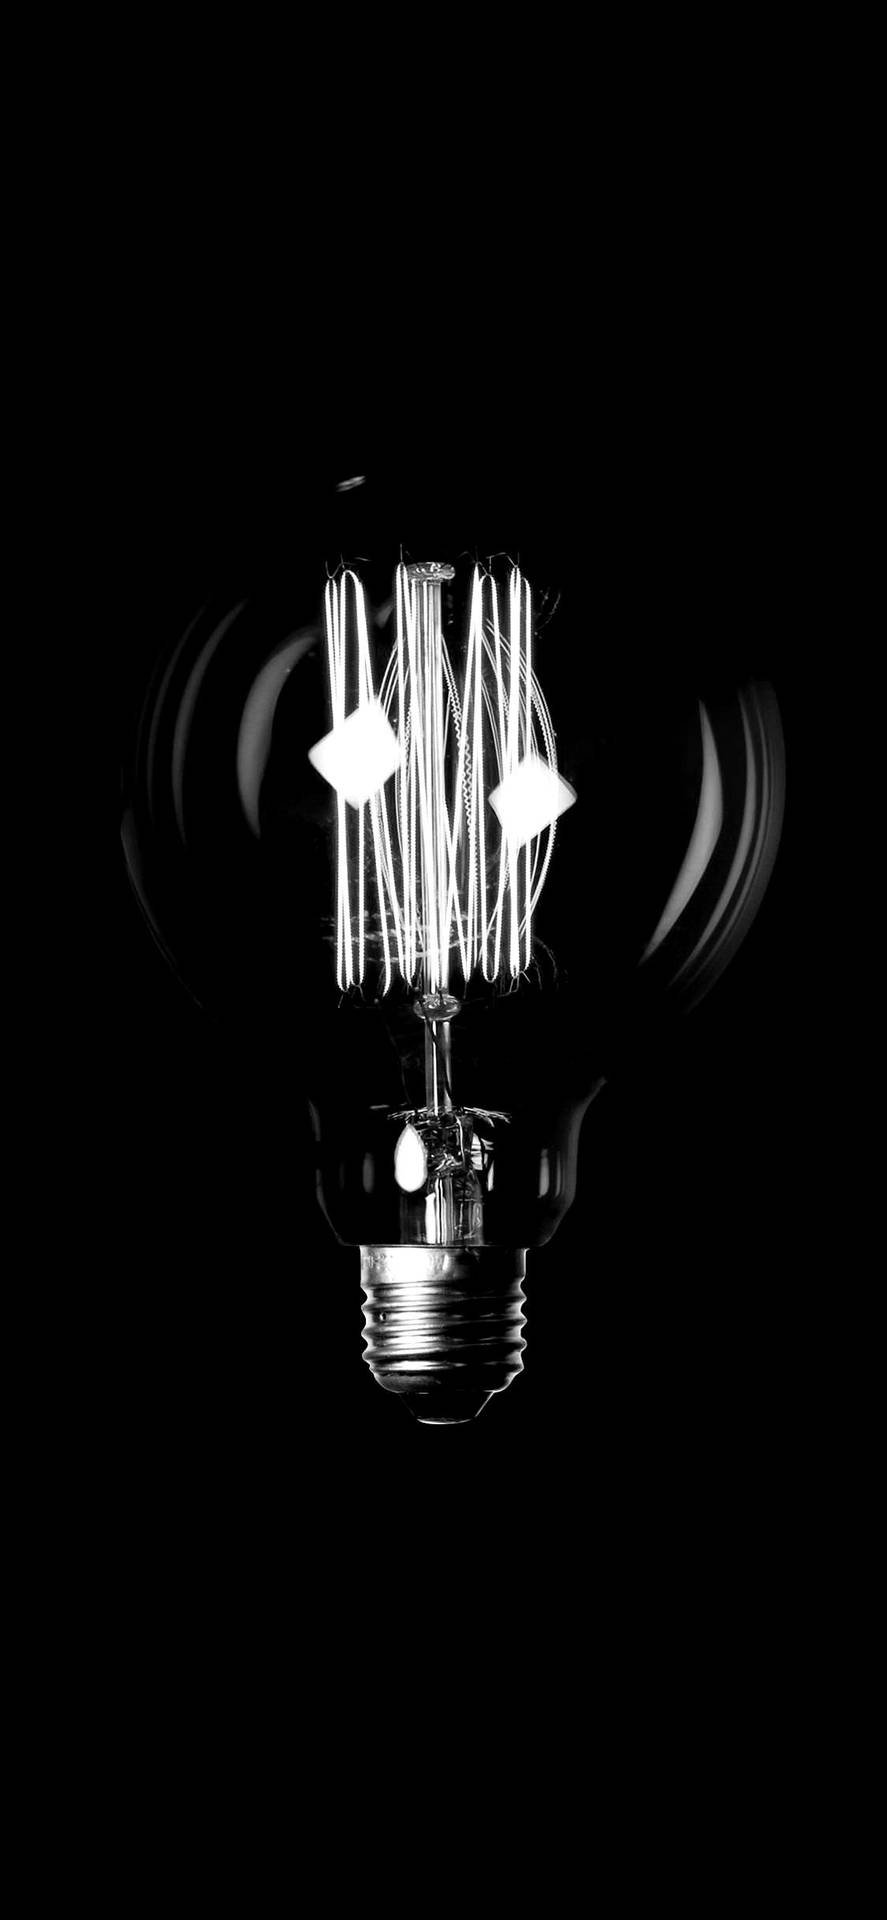 Highlighting Intelligence - A Monochrome Bulb Illustration